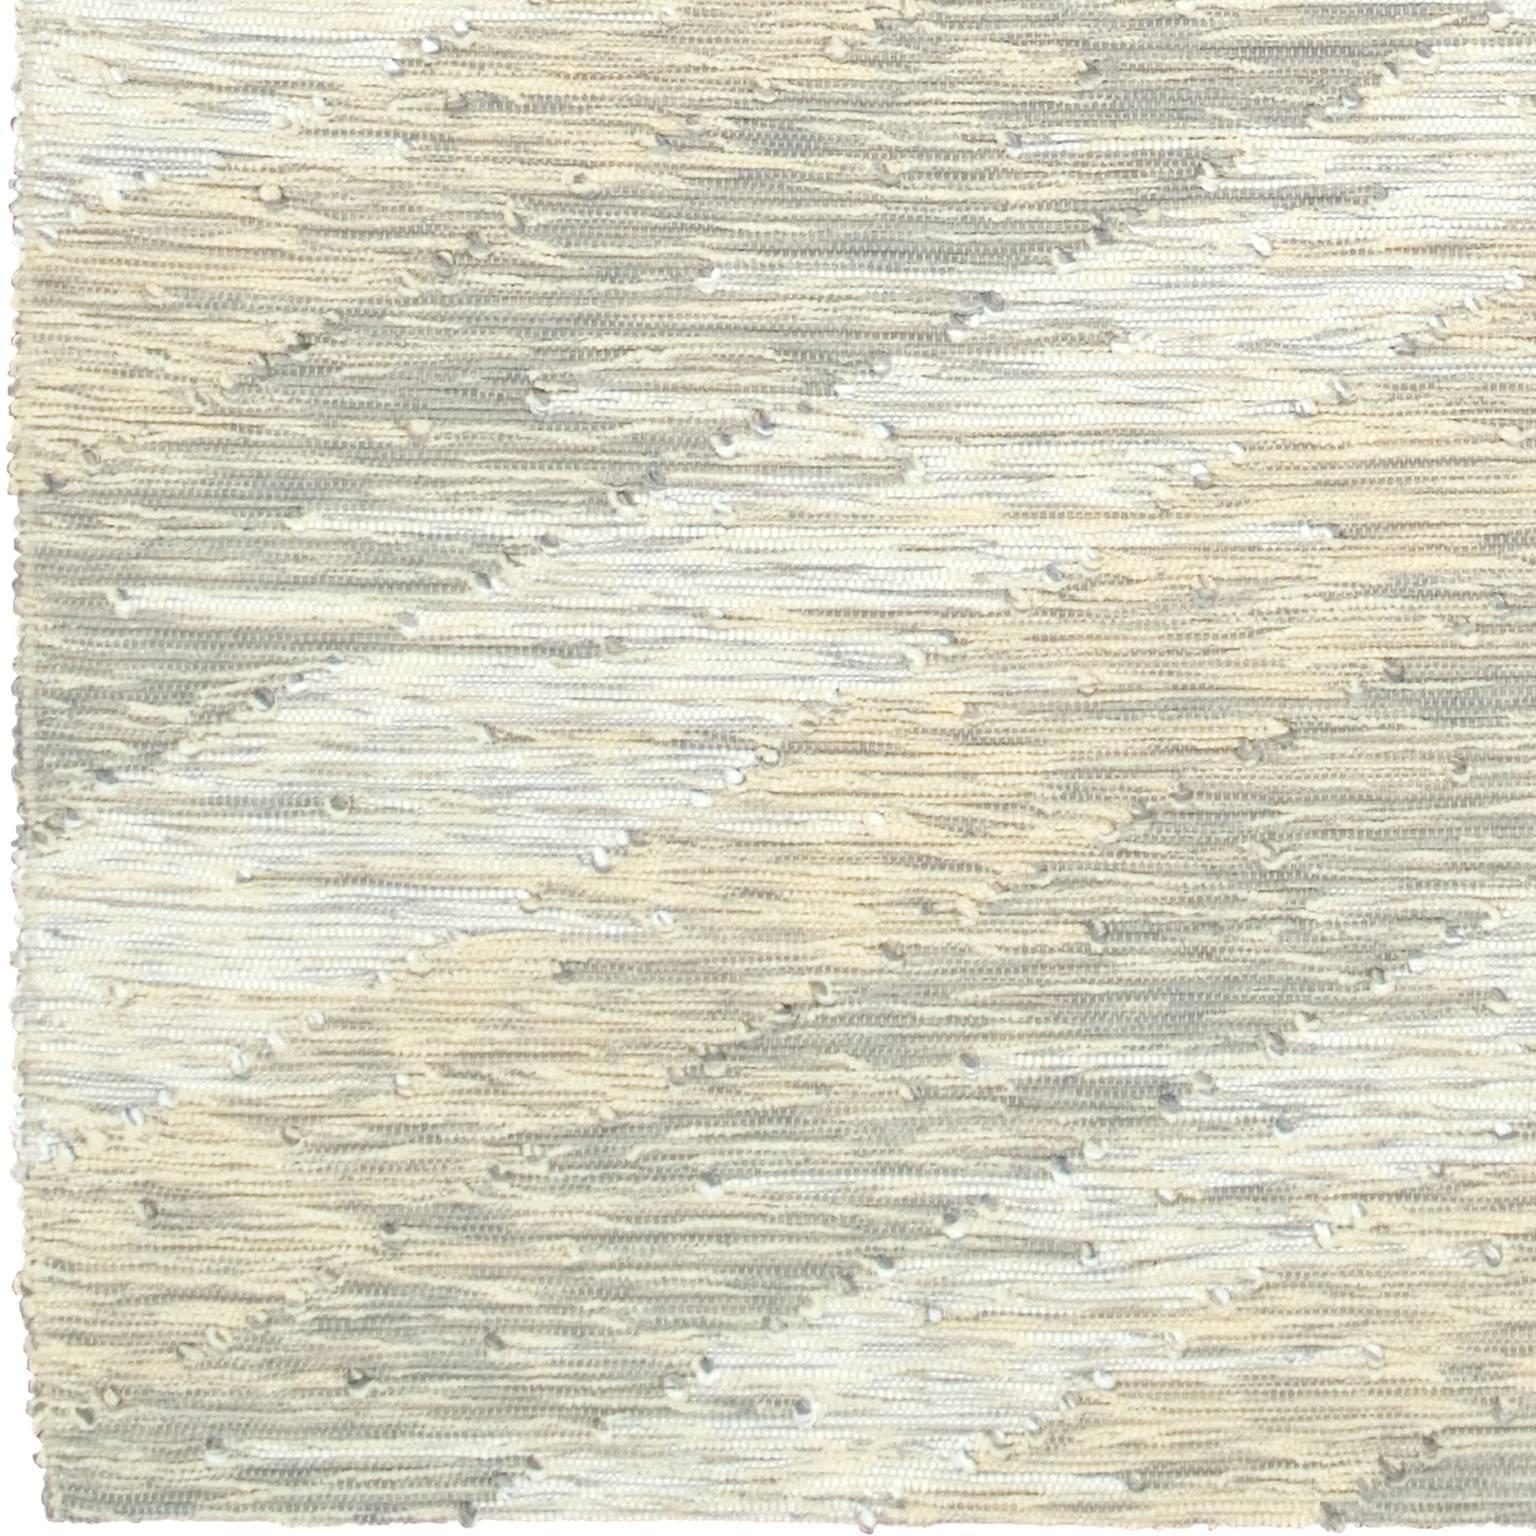 Contemporary Italian ‘Intreccio Diagonale’ carpet, soft gray
Italy, circa 2015.
Chenille Melange.
Handwoven 100% cotton rug.
Color: 6 (soft gray)
